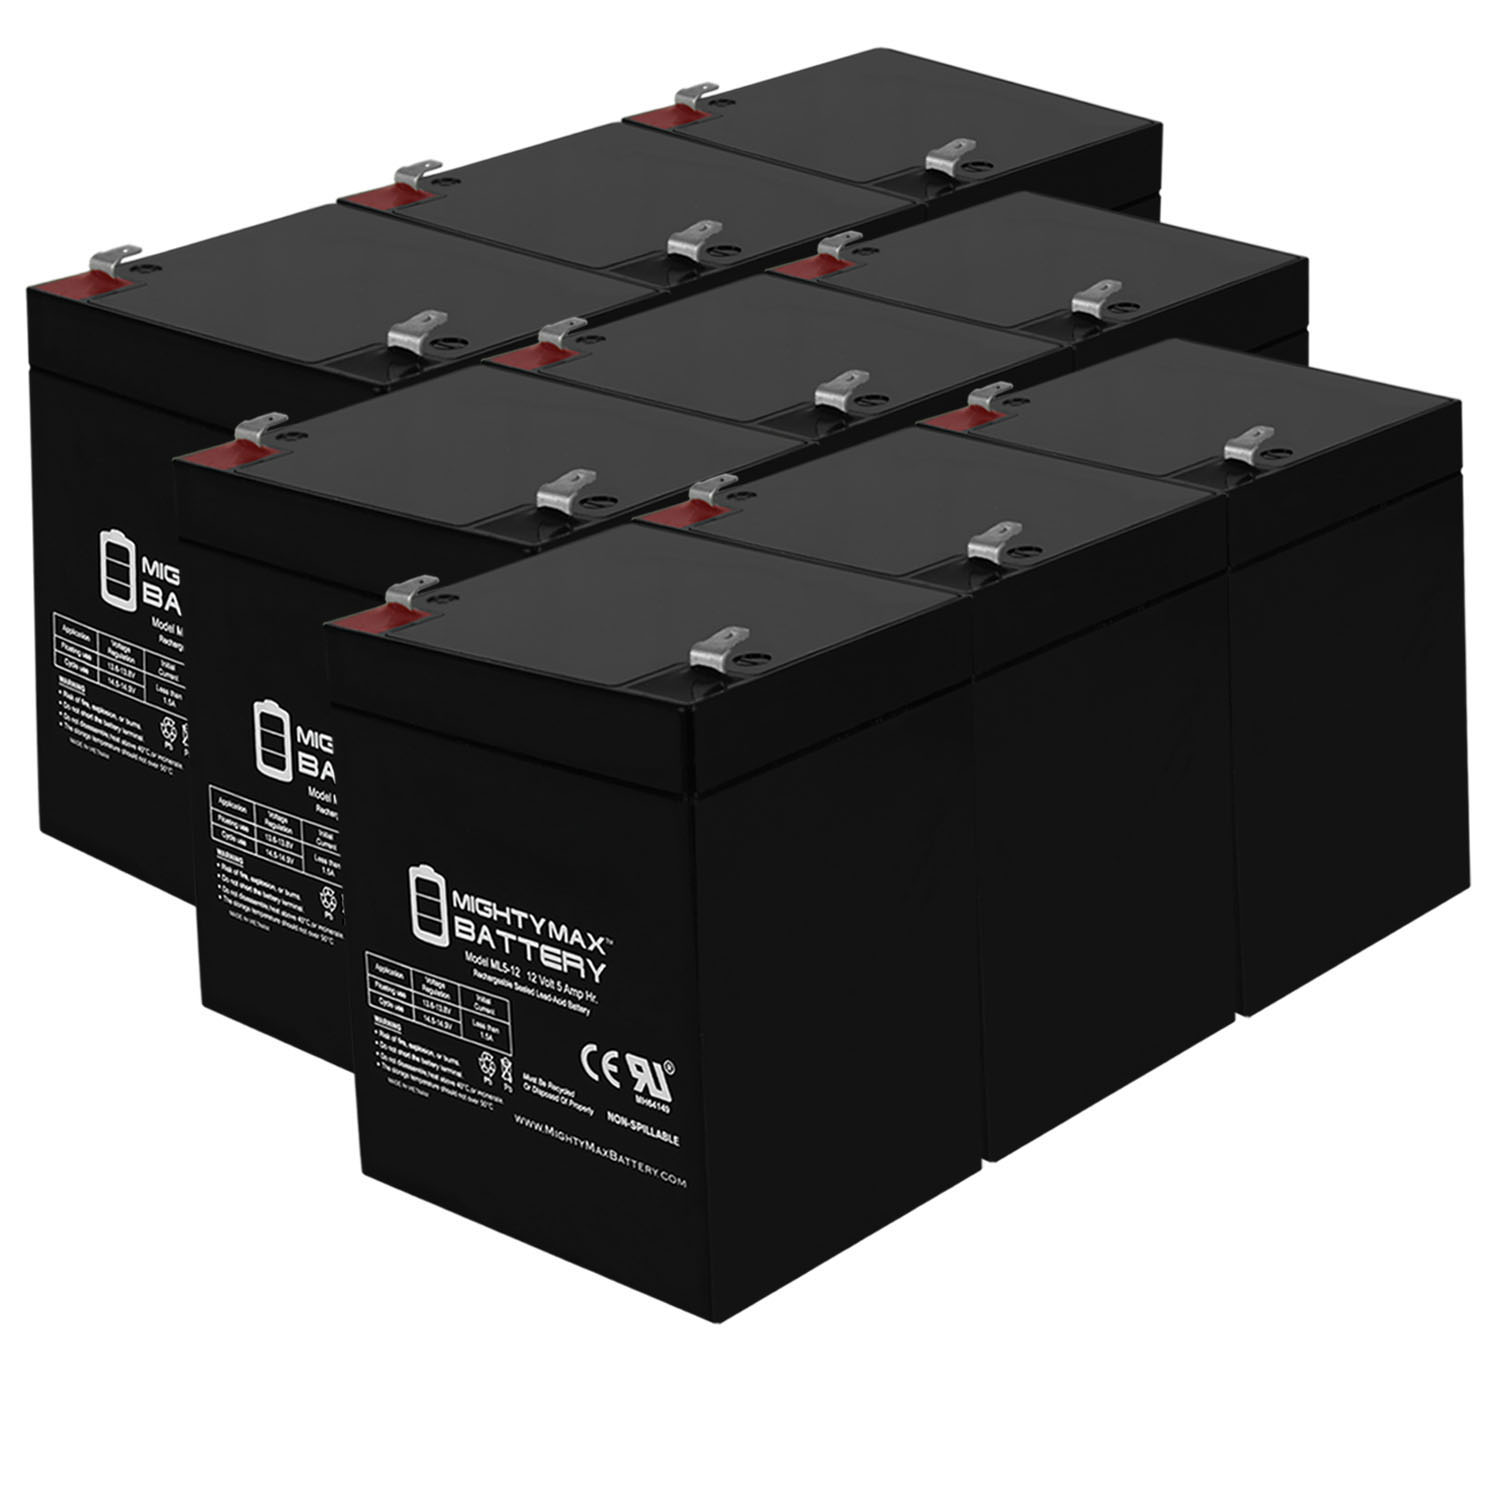 12V 5AH SLA Replacement Battery for Razor E150 Red 13111601 - 9 Pack